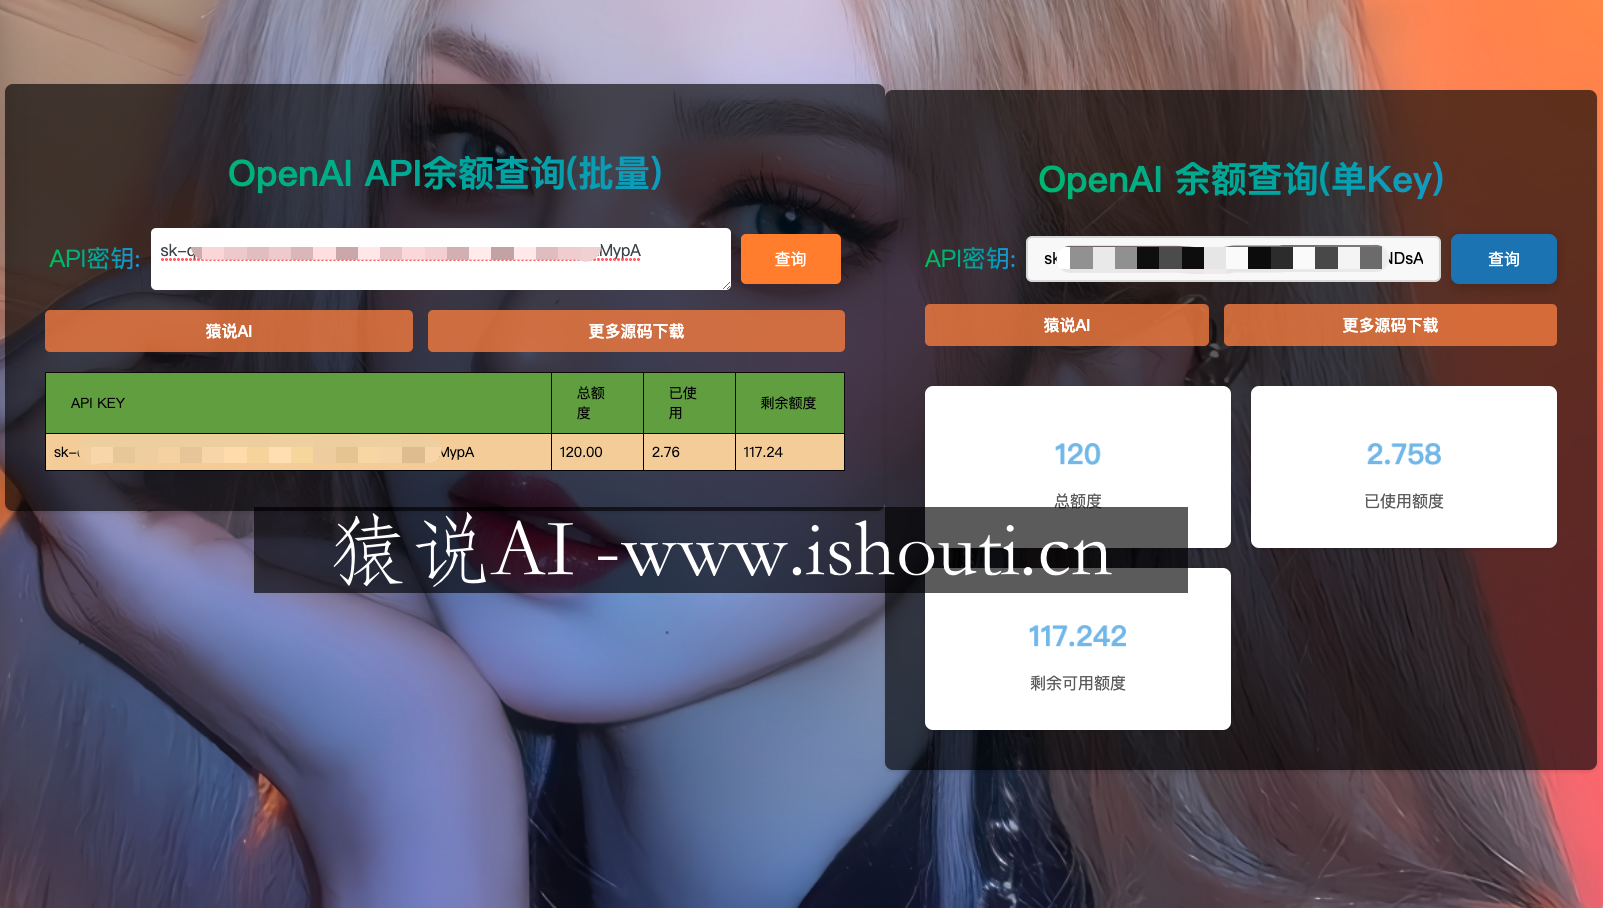 OpenAI 账户 ChatGPT 余额的在线查询源码 - 猿说AI